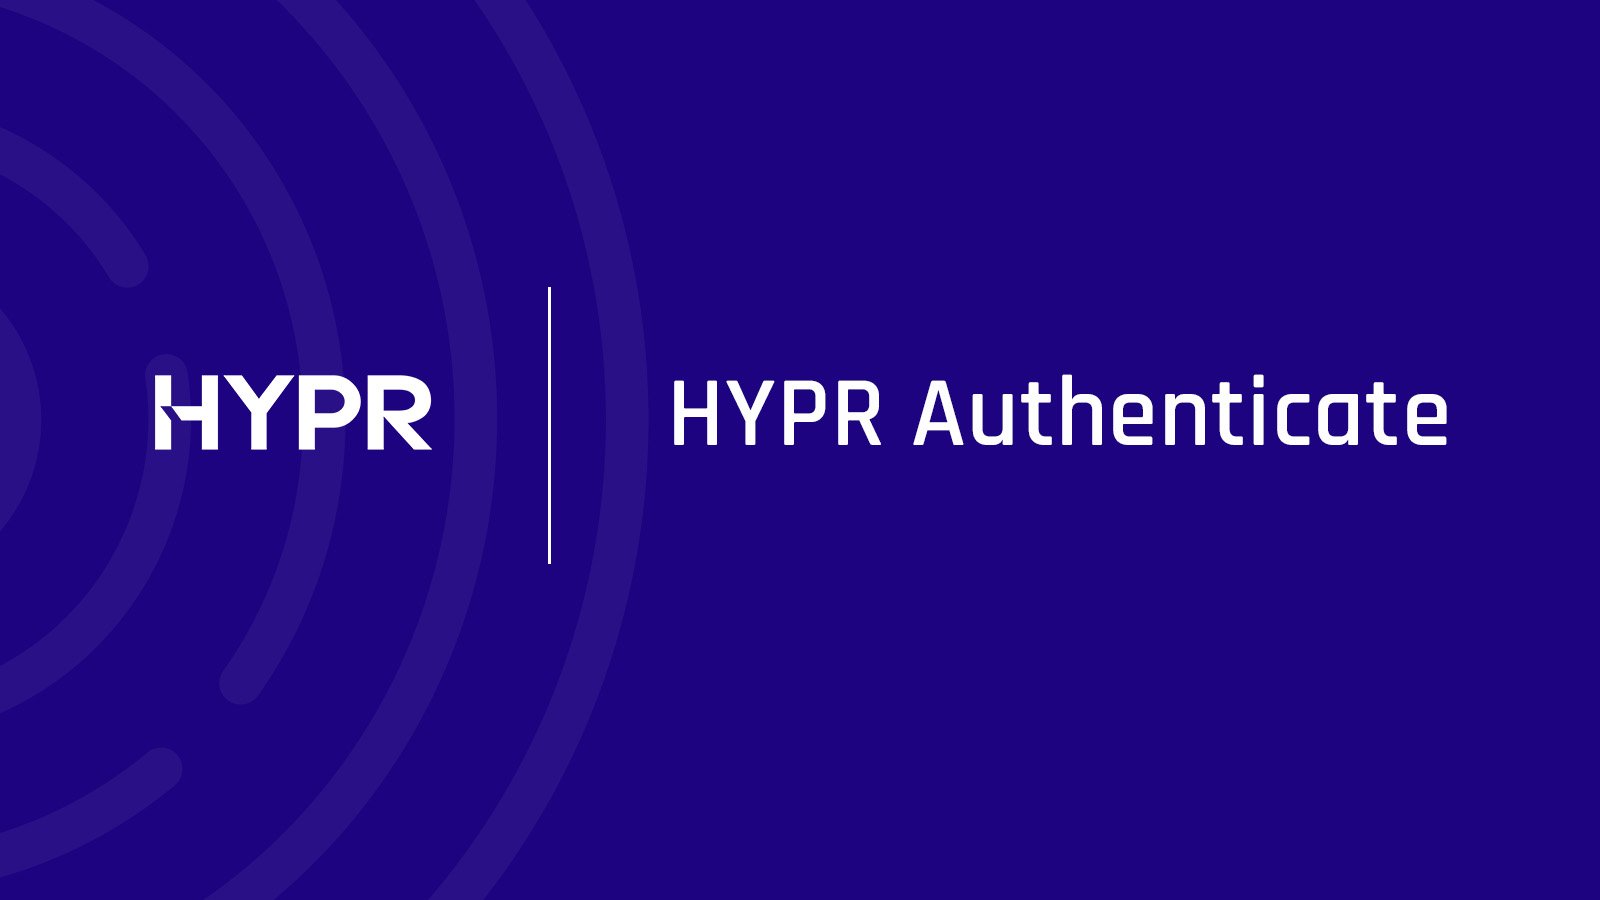 authentication logo